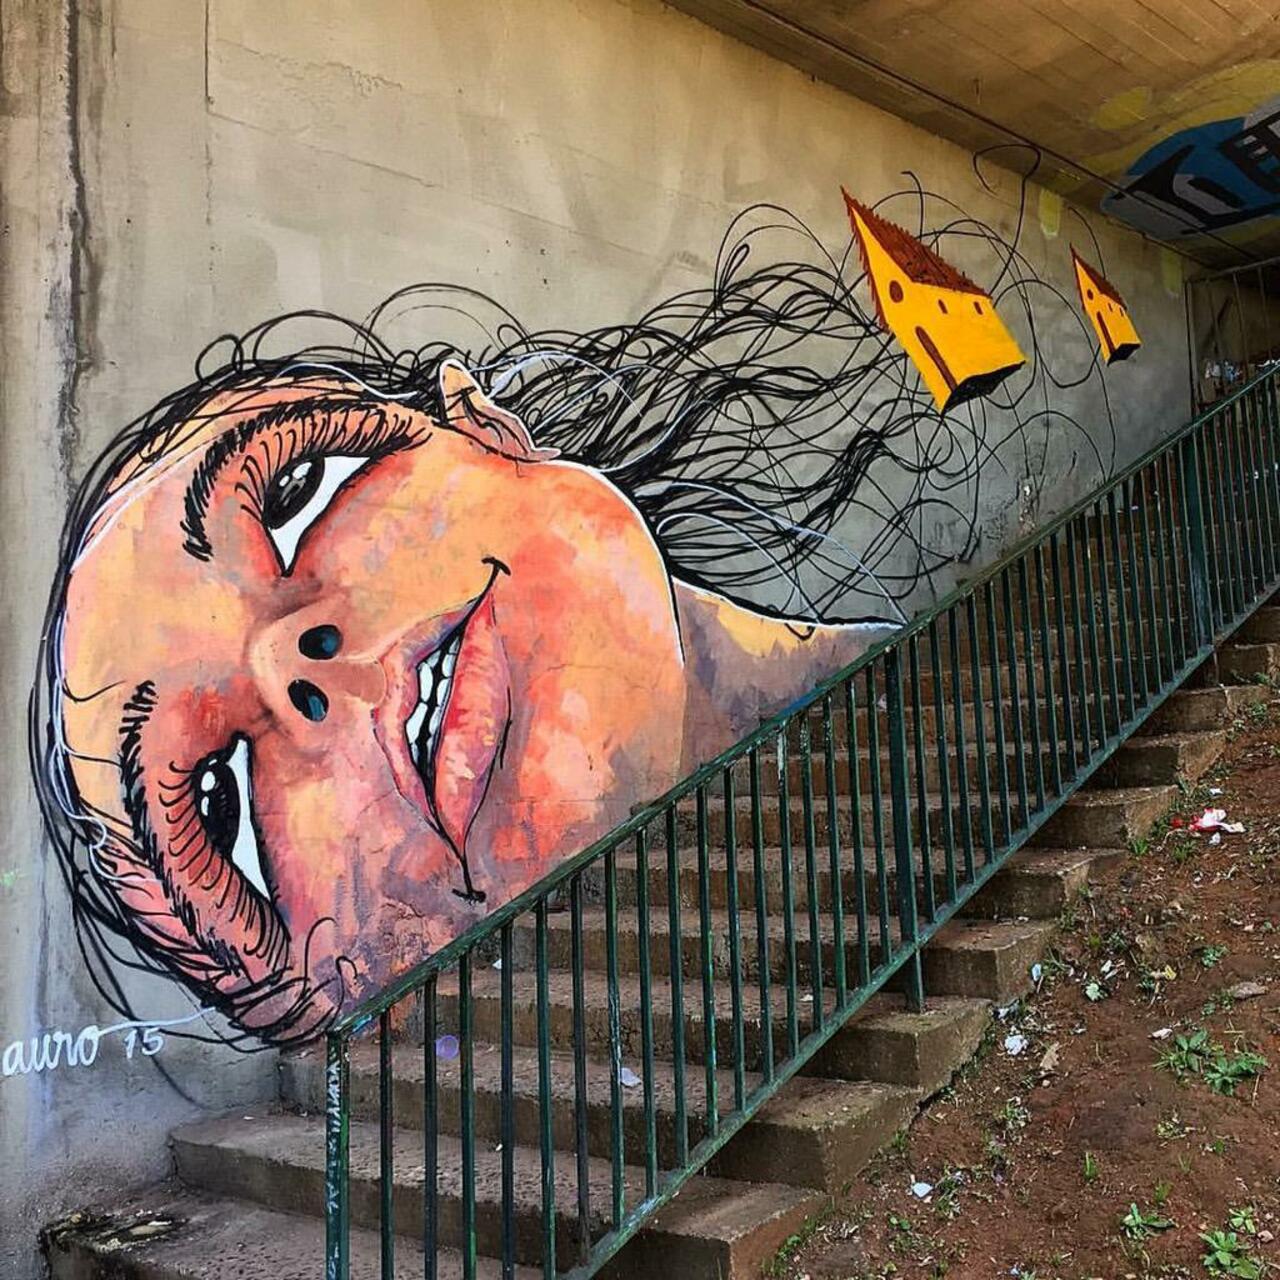 Street Art by Reveracidade in São Paulo 

#art #graffiti #mural #streetart http://t.co/lONovh5wzL